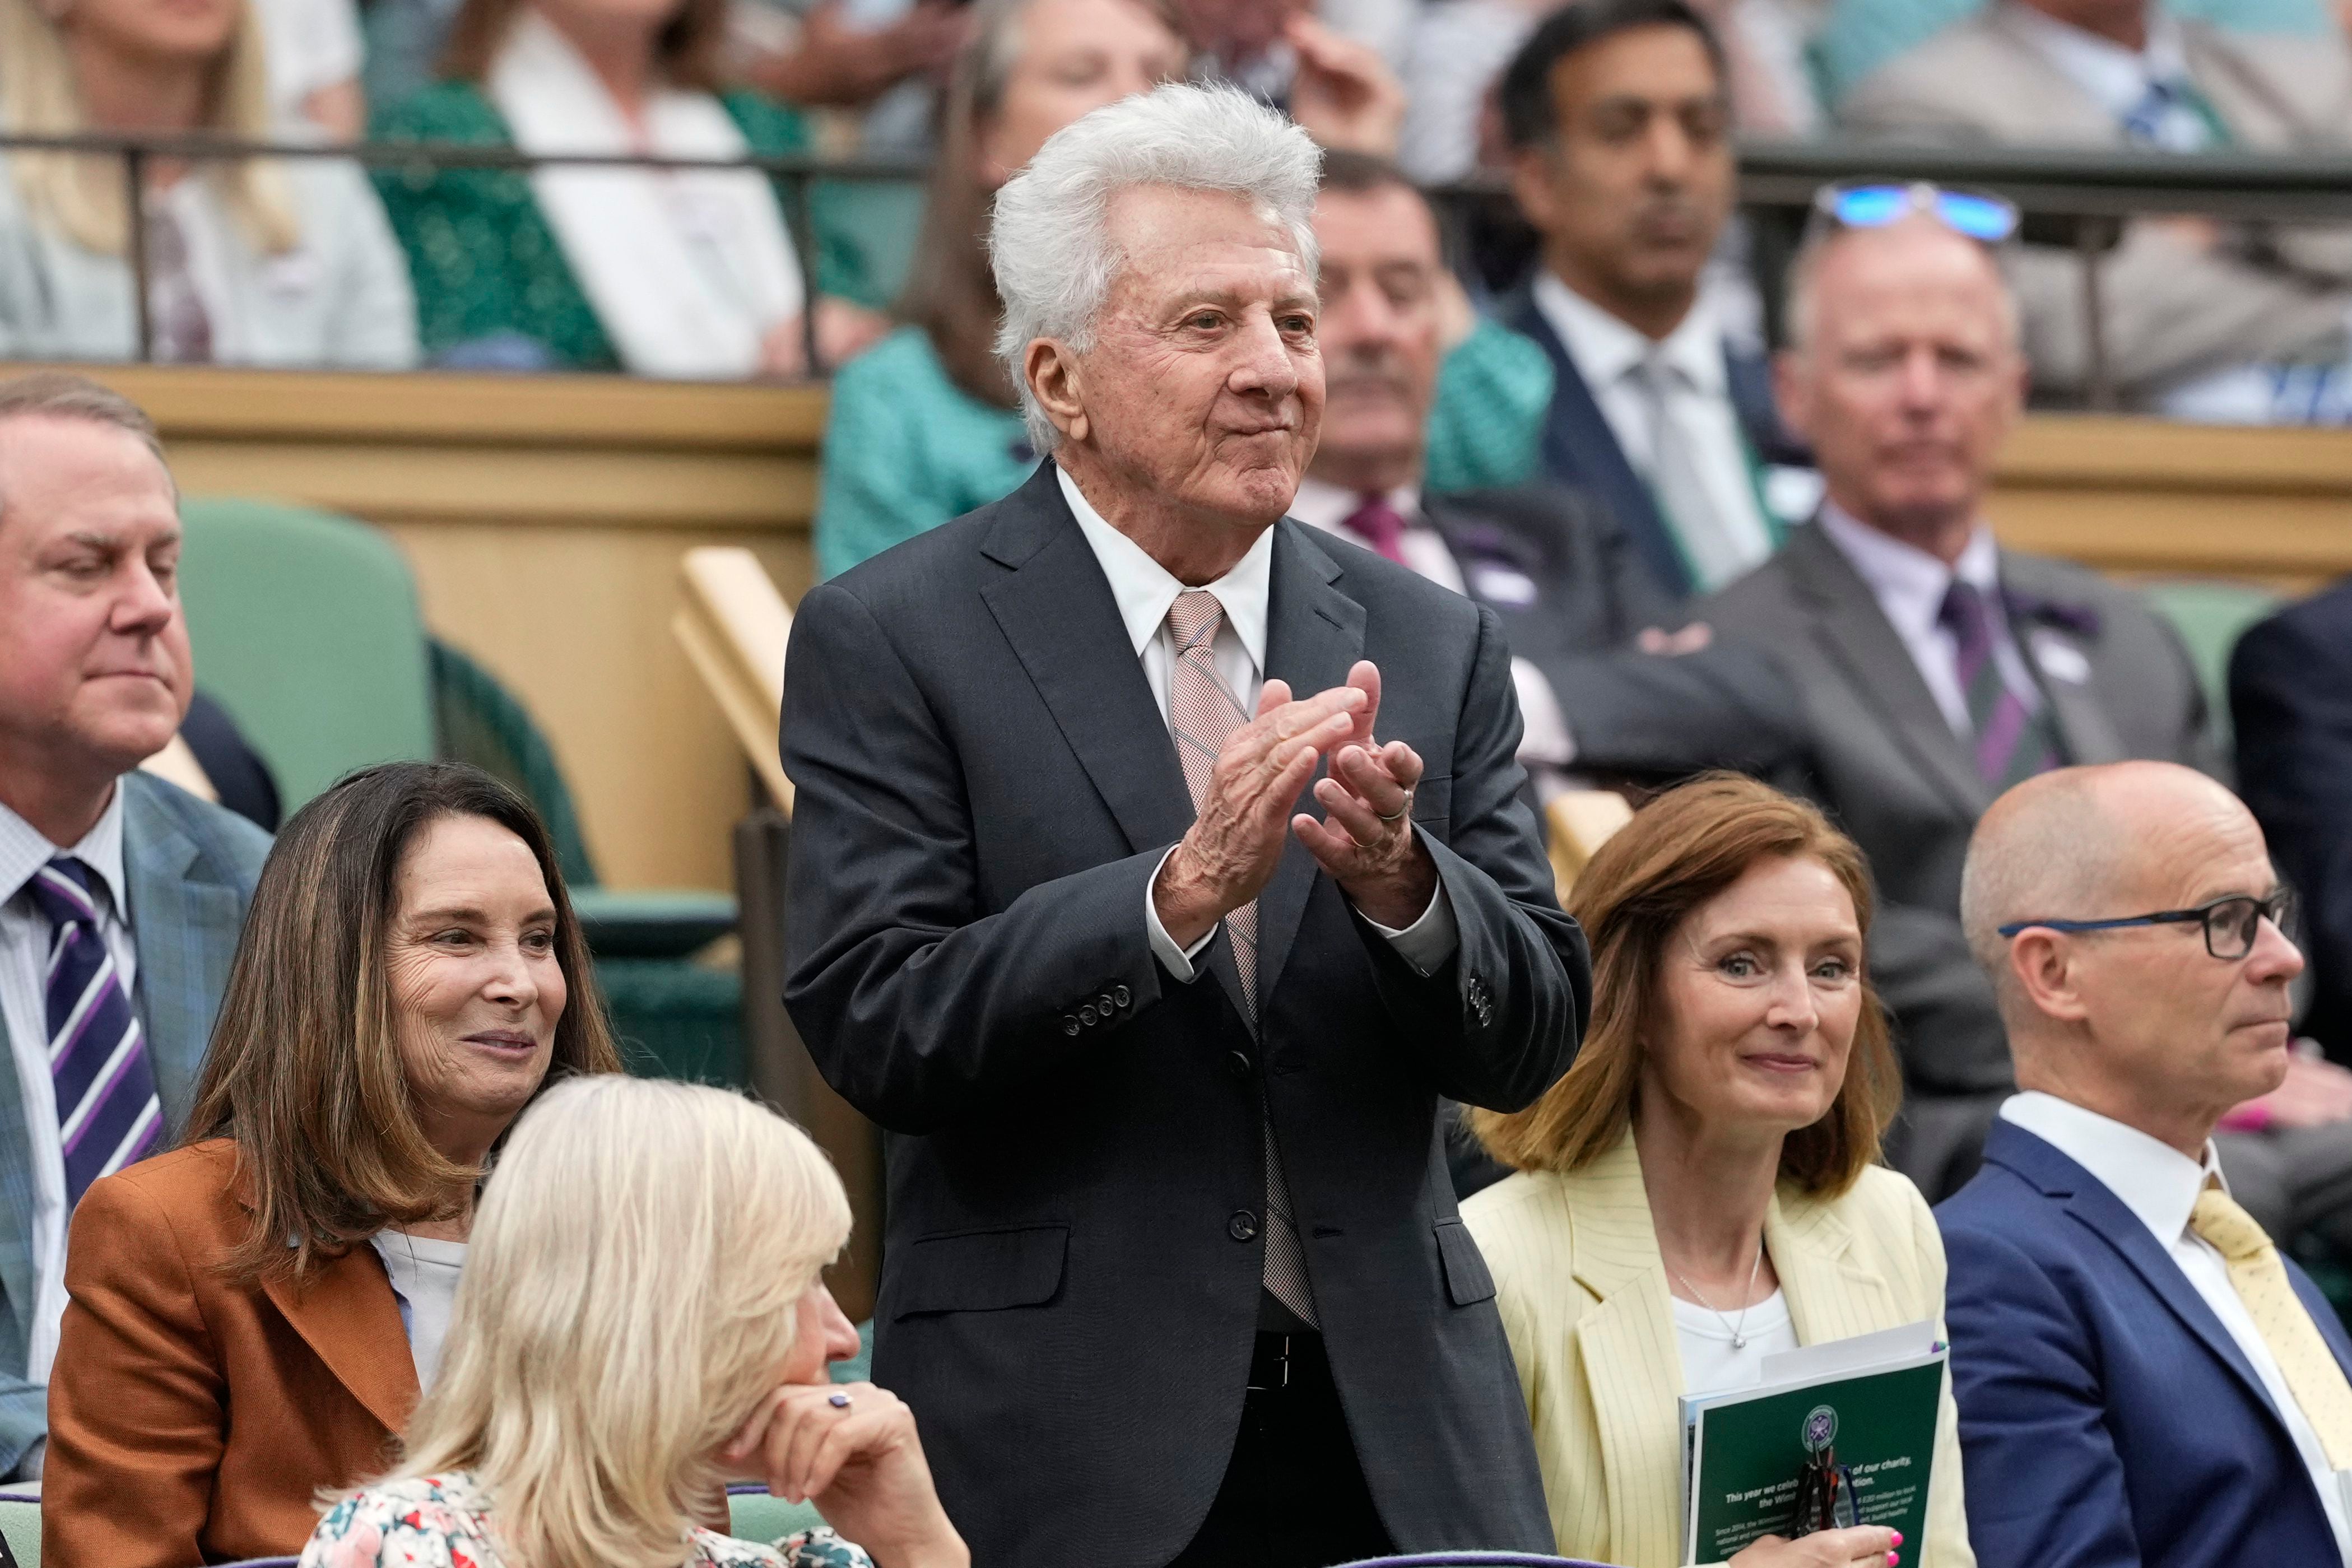 Actor Dustin Hoffman and Super Bowl winner Patrick Mahomes among celebrities at Wimbledon thumbnail